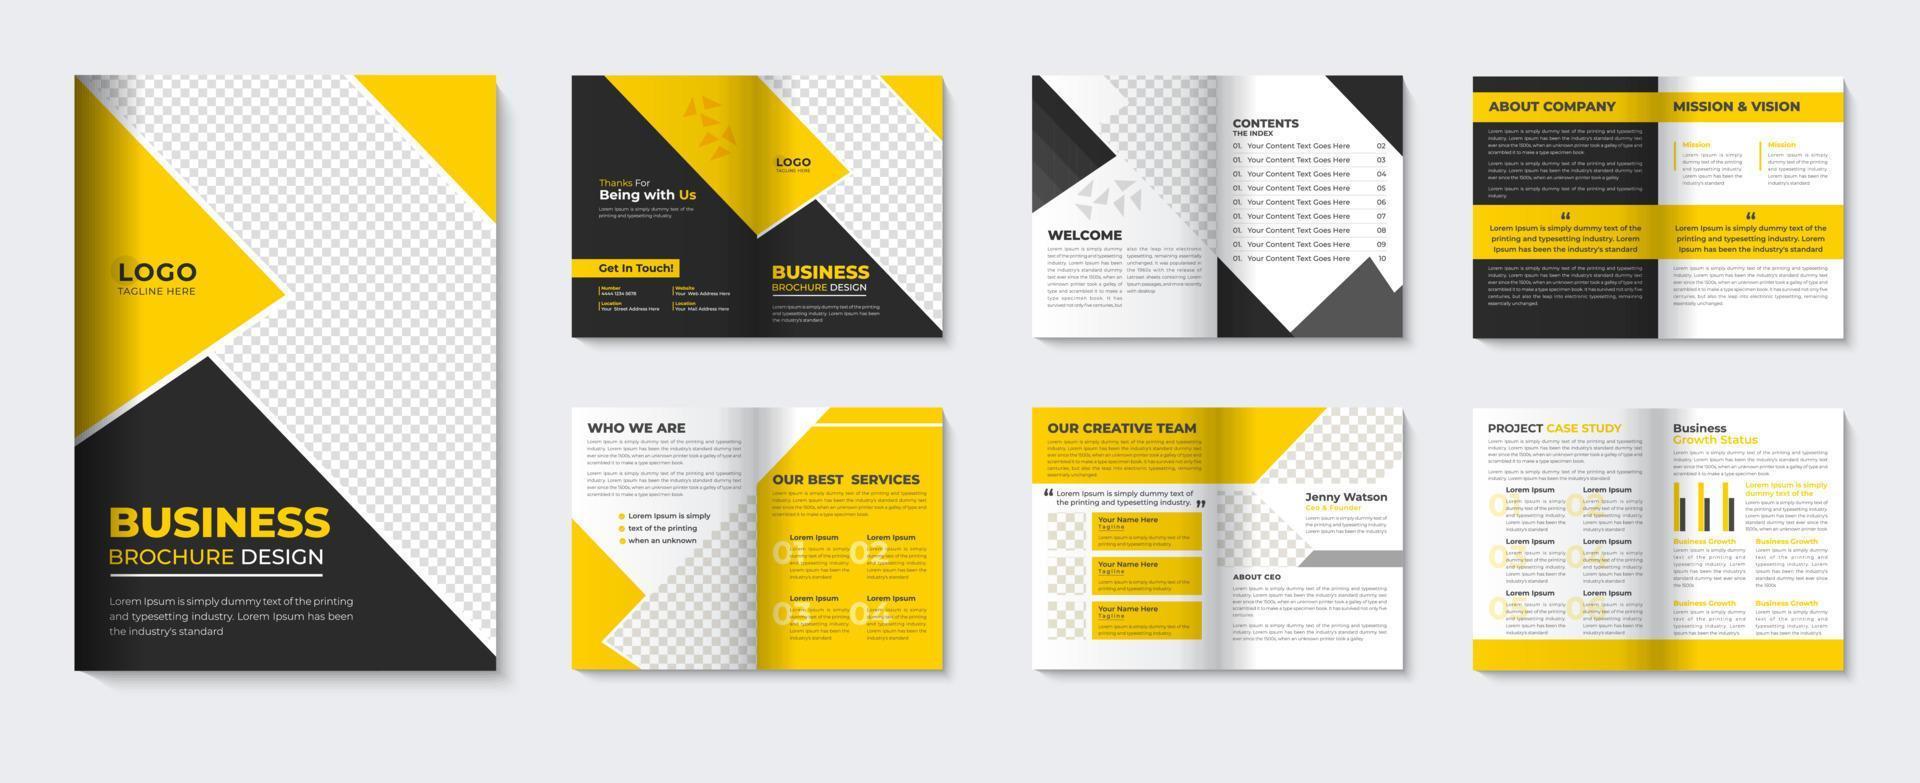 modelo de brochura corporativa e design de página de capa amarela de perfil de empresa de folheto minimalista vetor